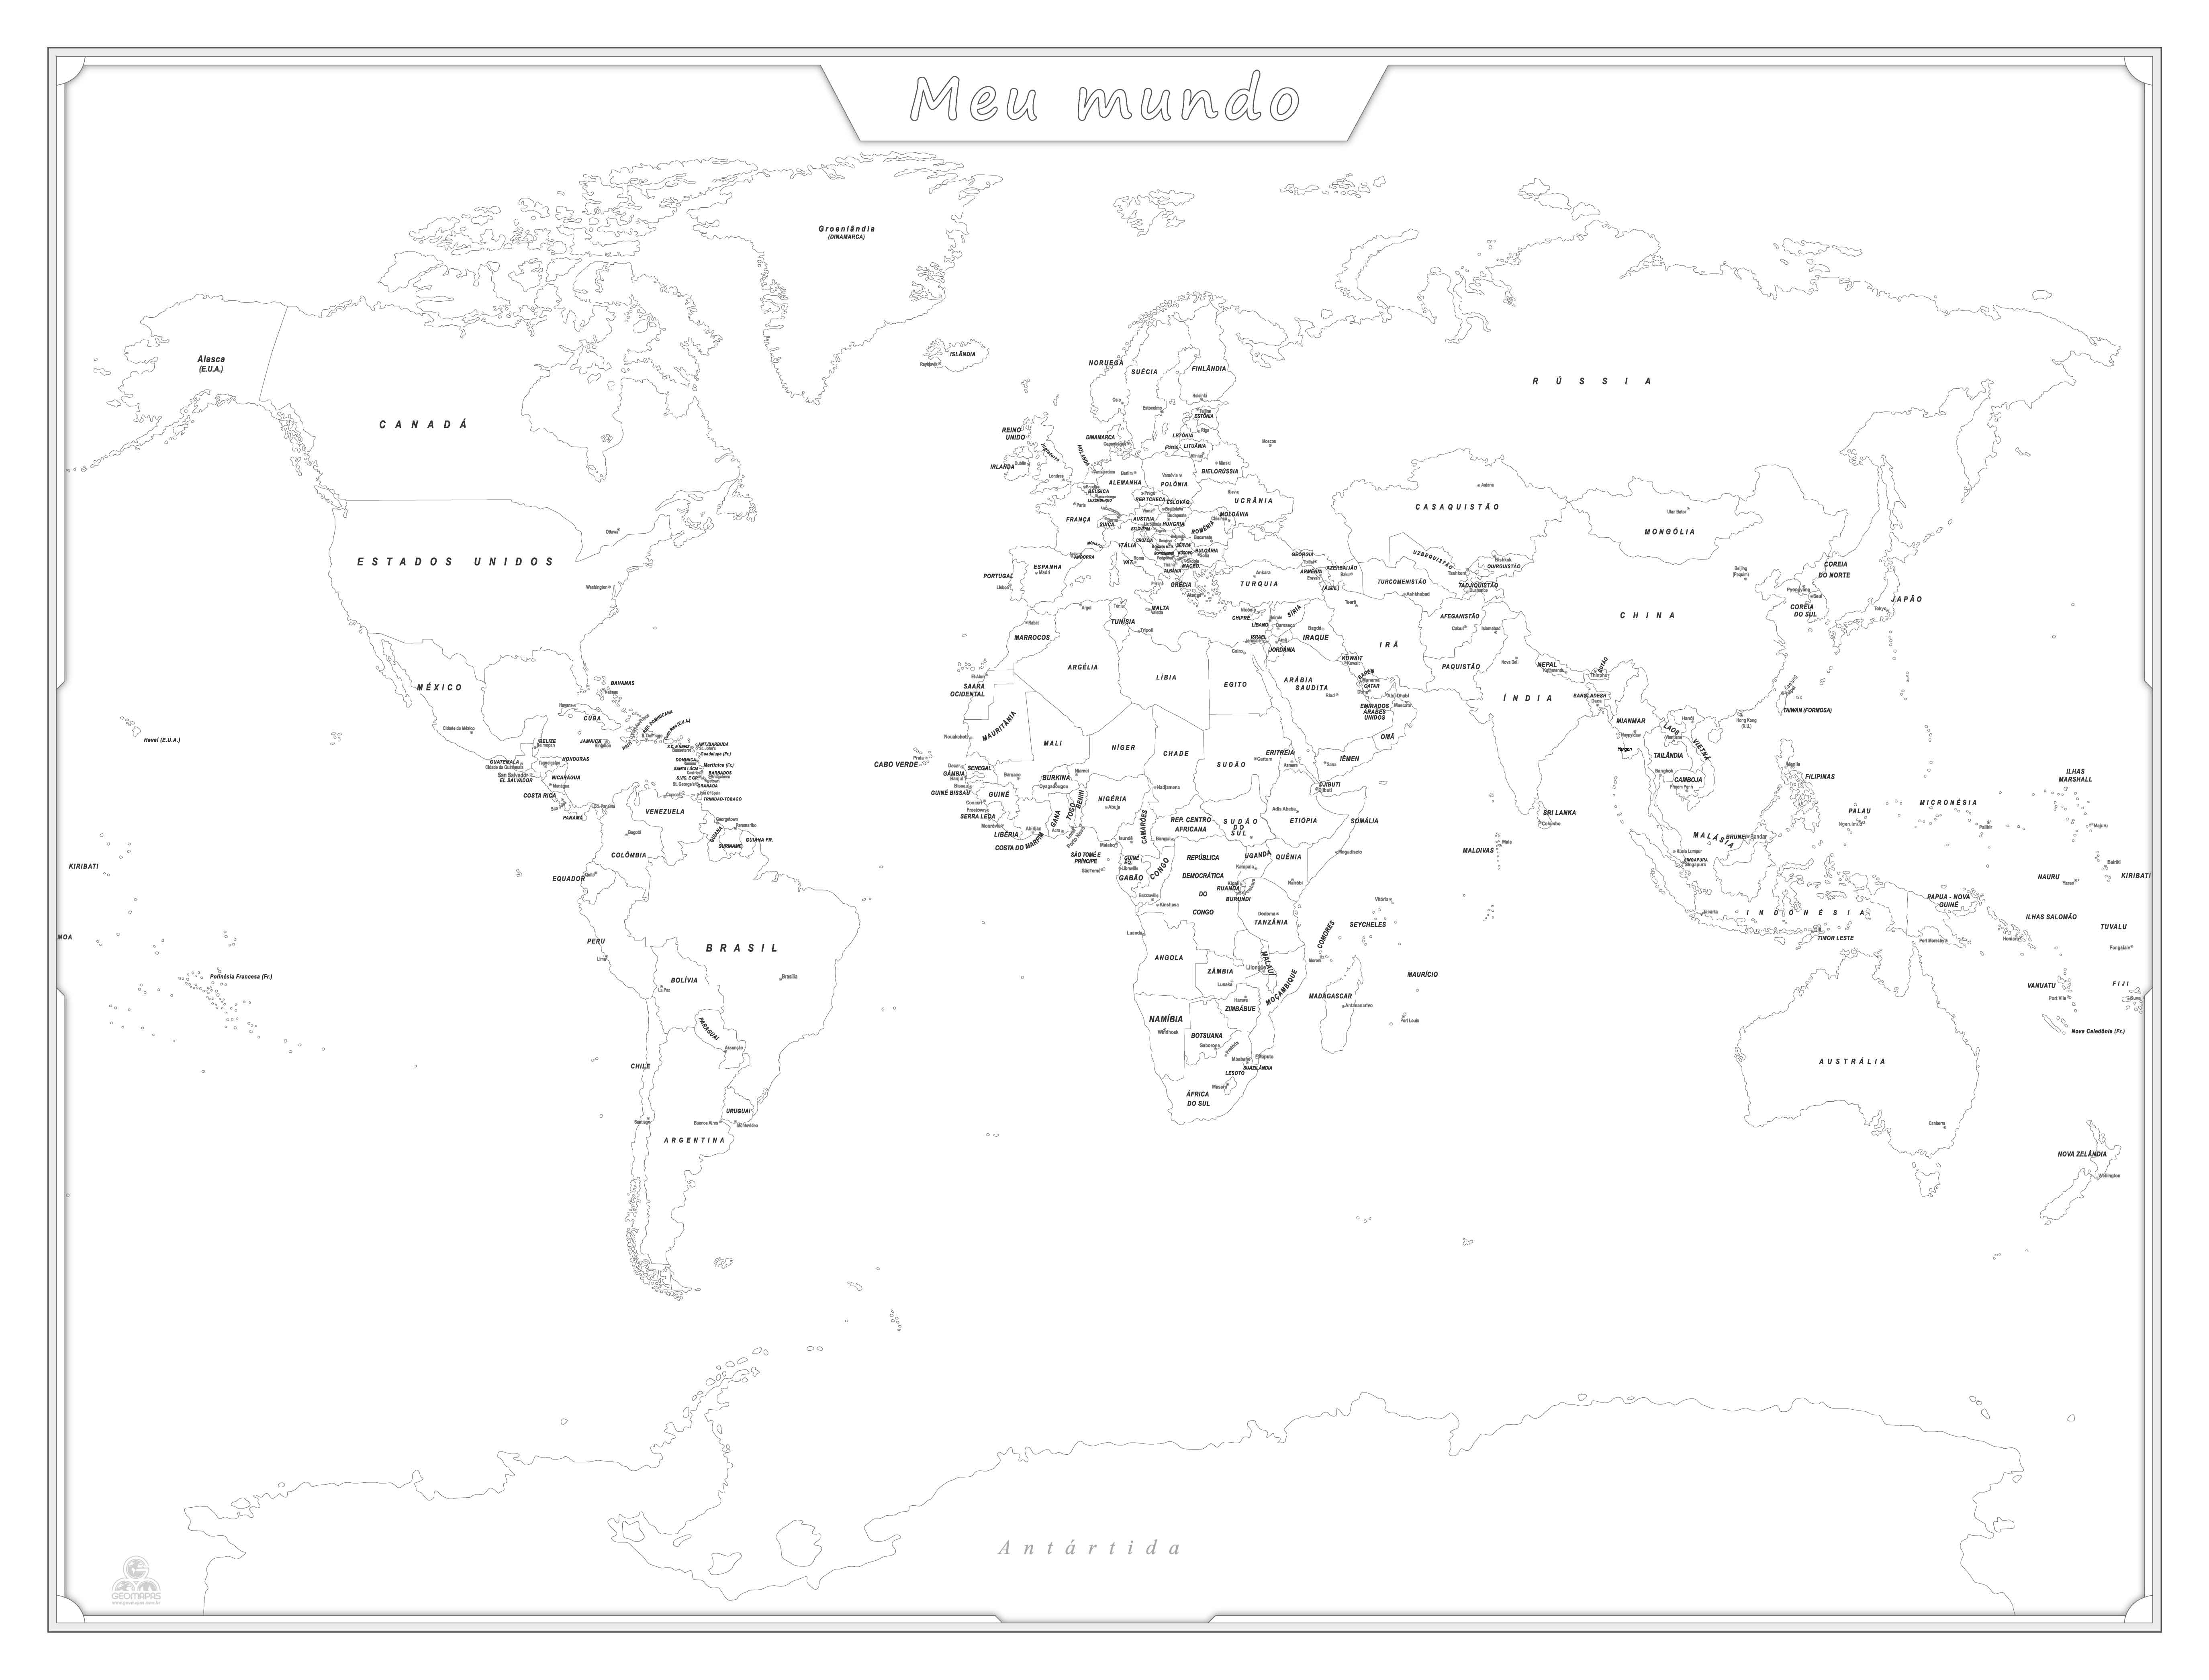 Ref. 150 Mapa-Múndi Meu Mundo - para colorir - Formato 1,20x0,90cm